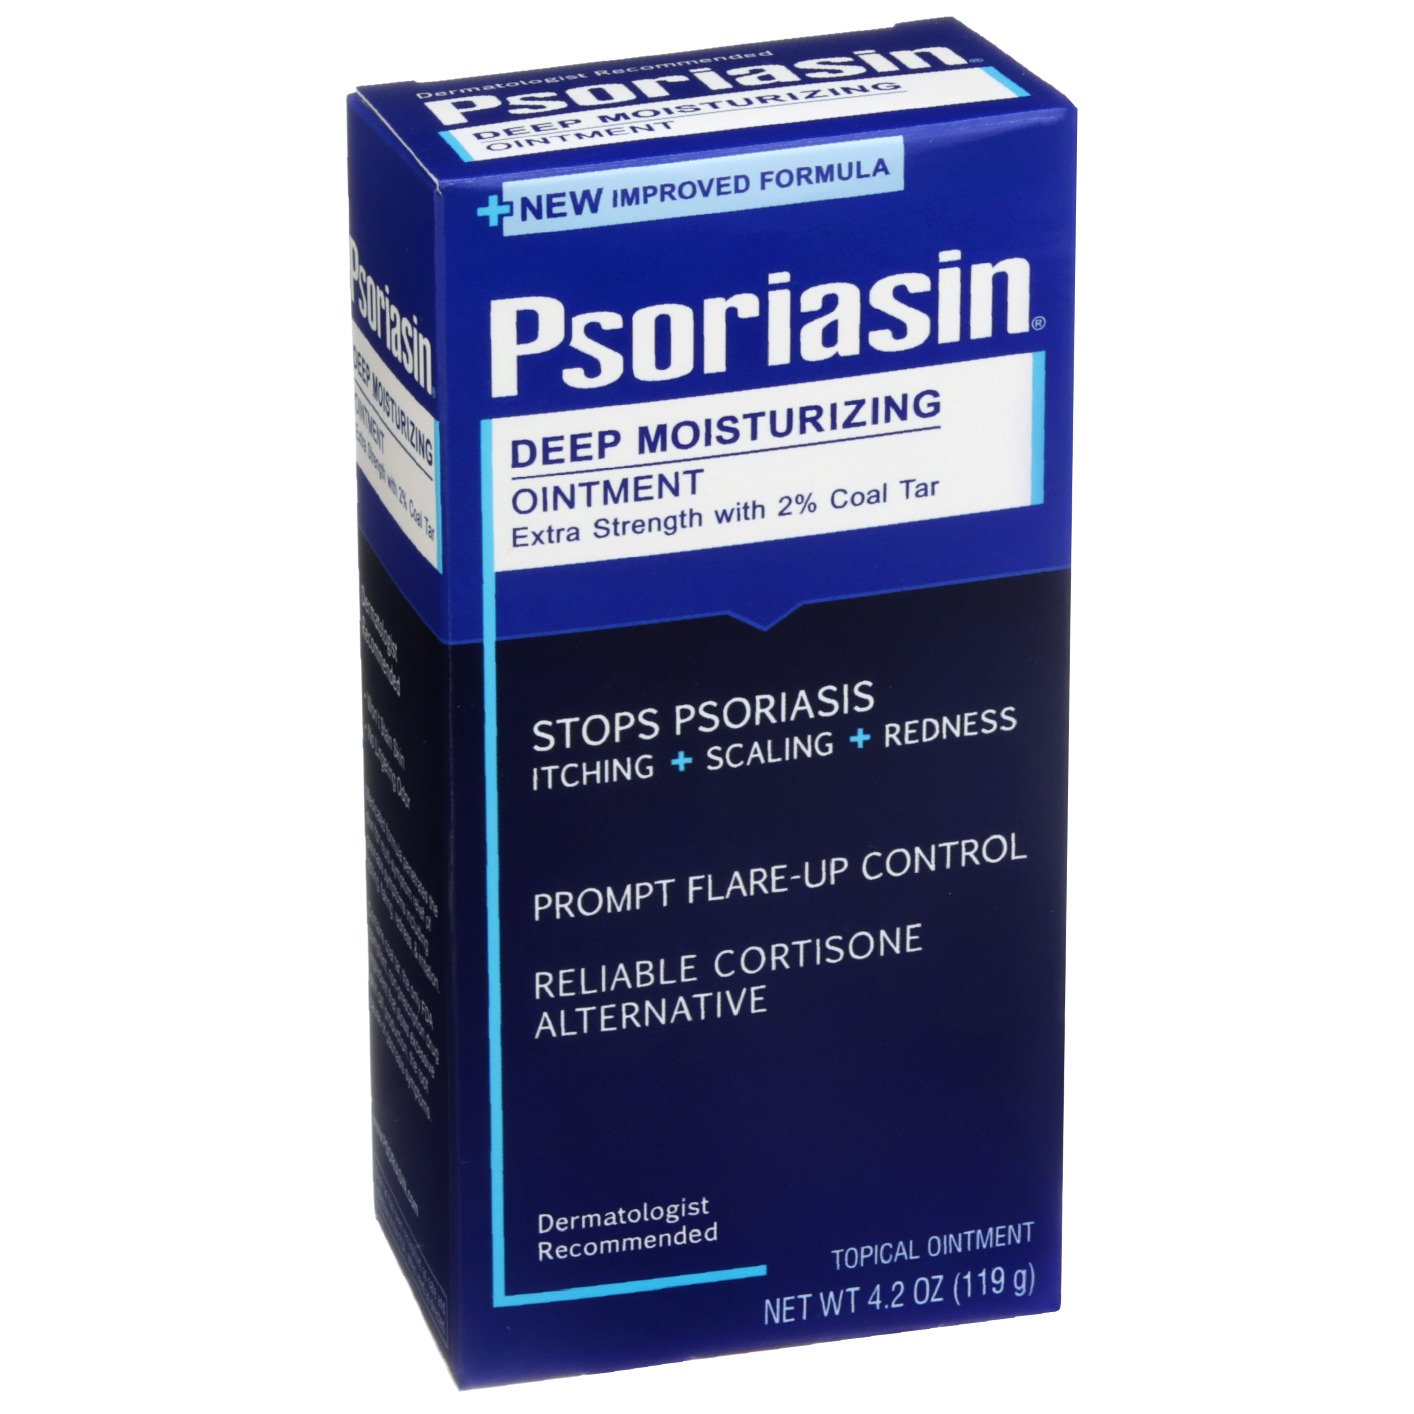 psoriasin ointment intensive moisturizing)